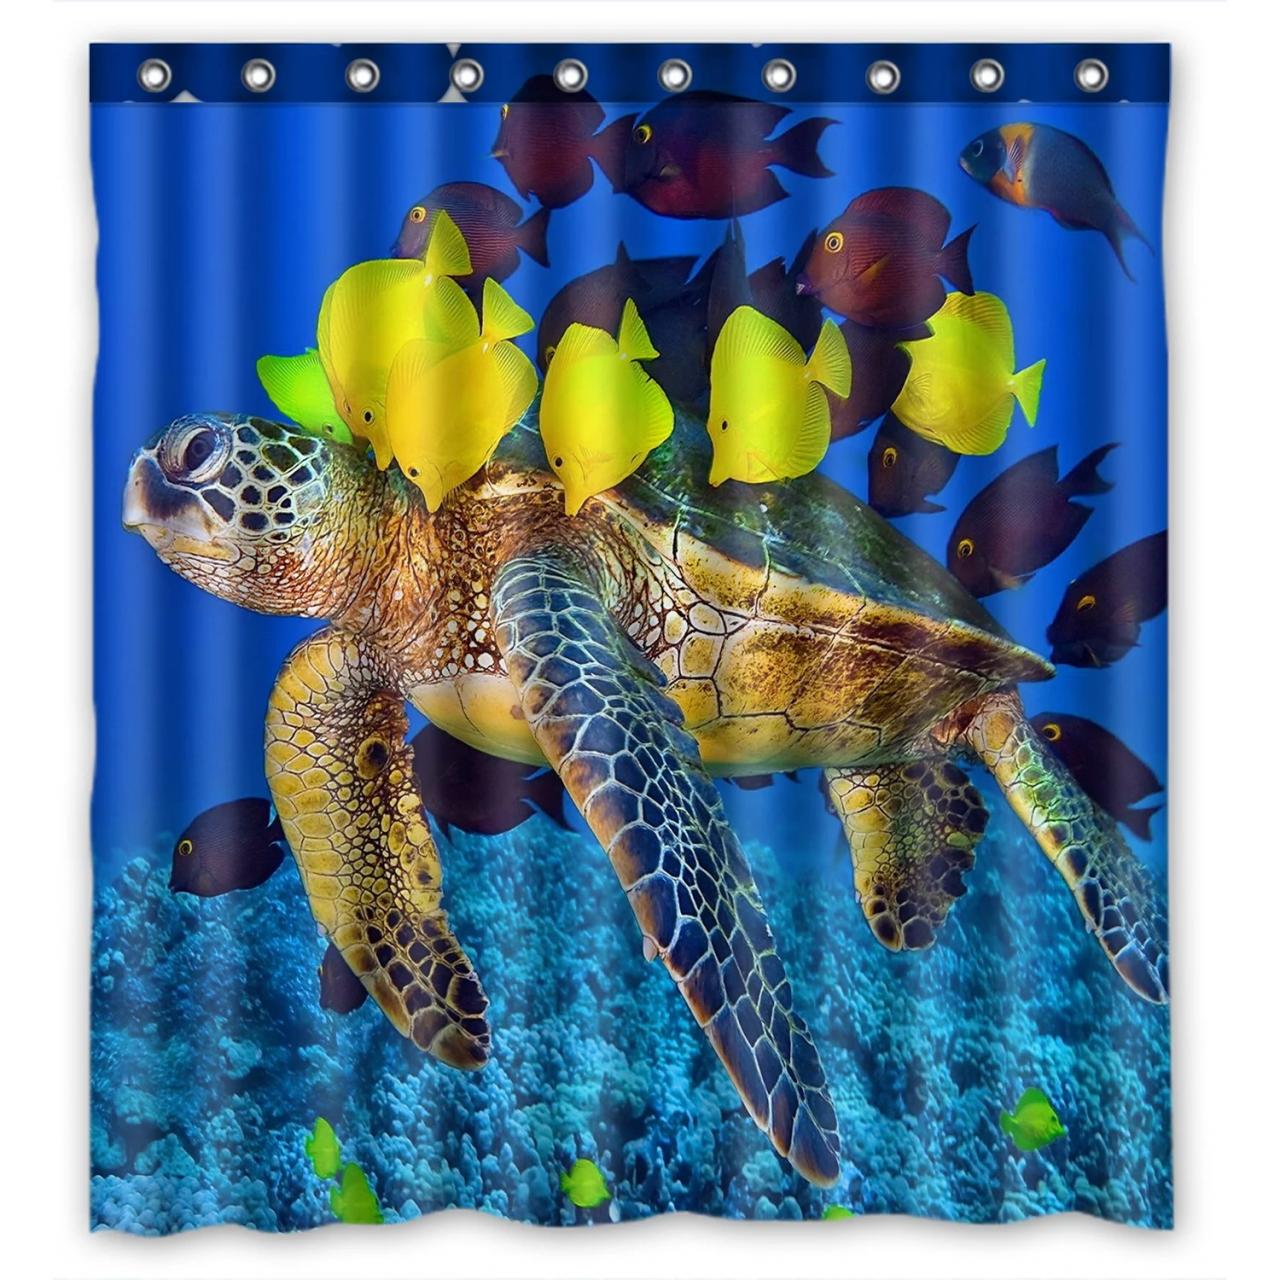 ZKGK Sea Turtle Painting Waterproof Shower Curtain Bathroom Decor Sets